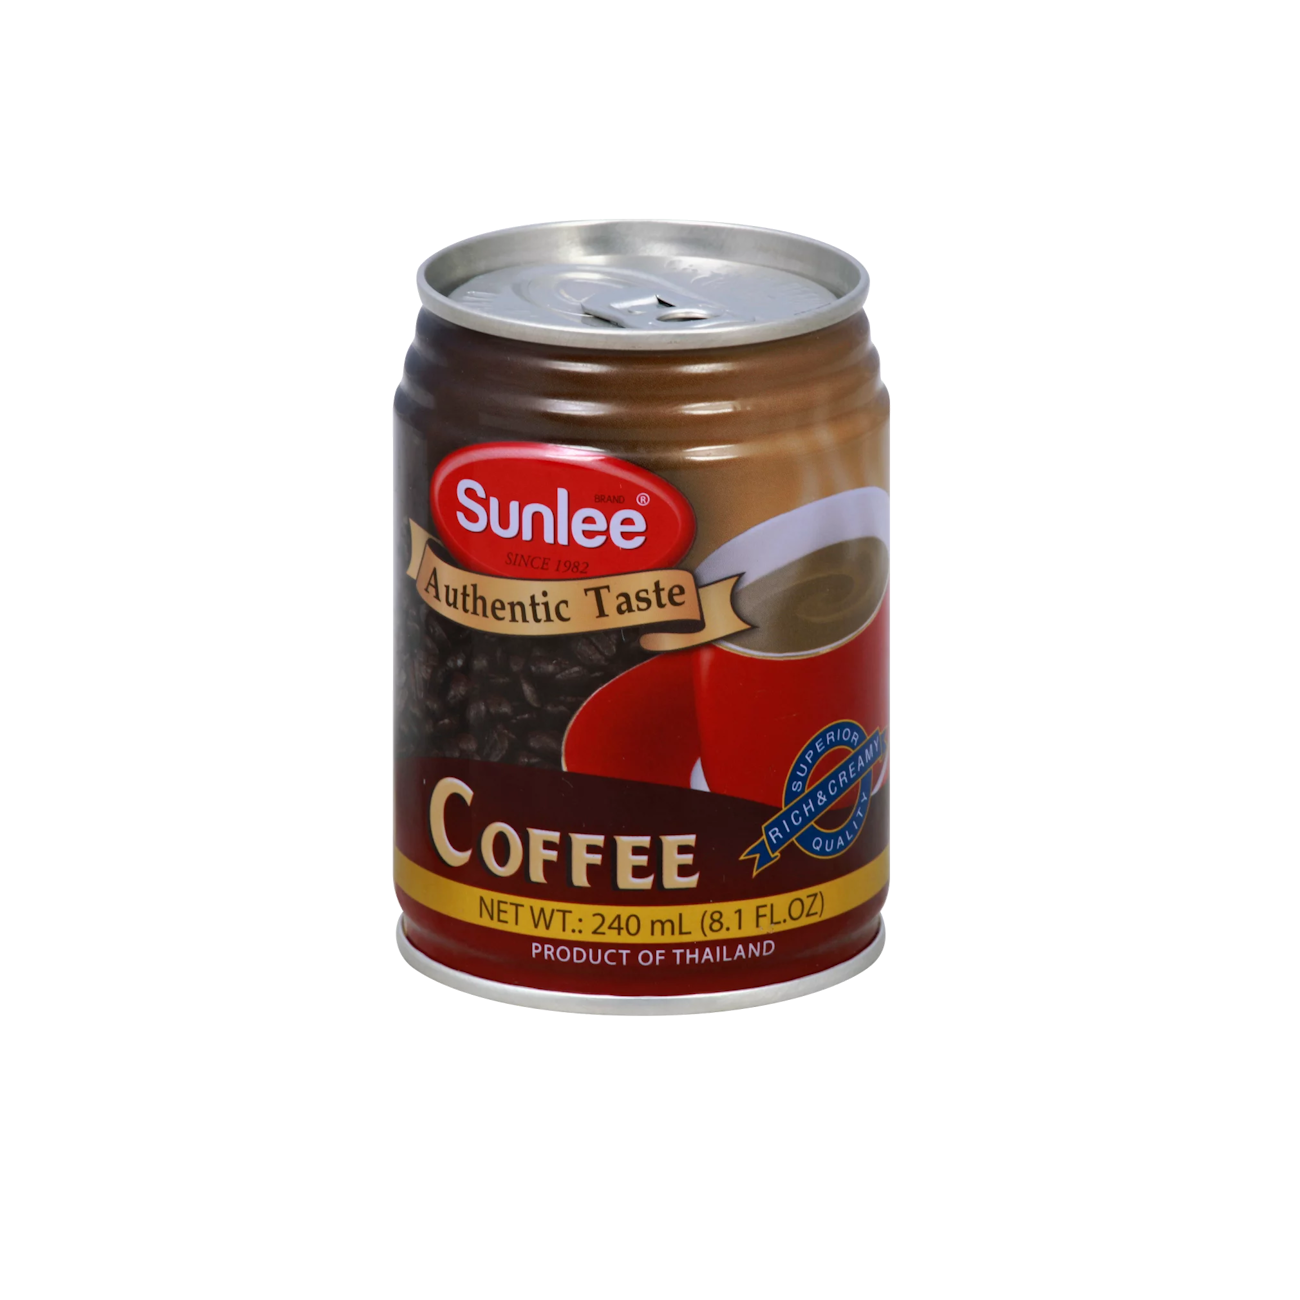 Sunlee Thai Coffee Authentic Taste 240ml